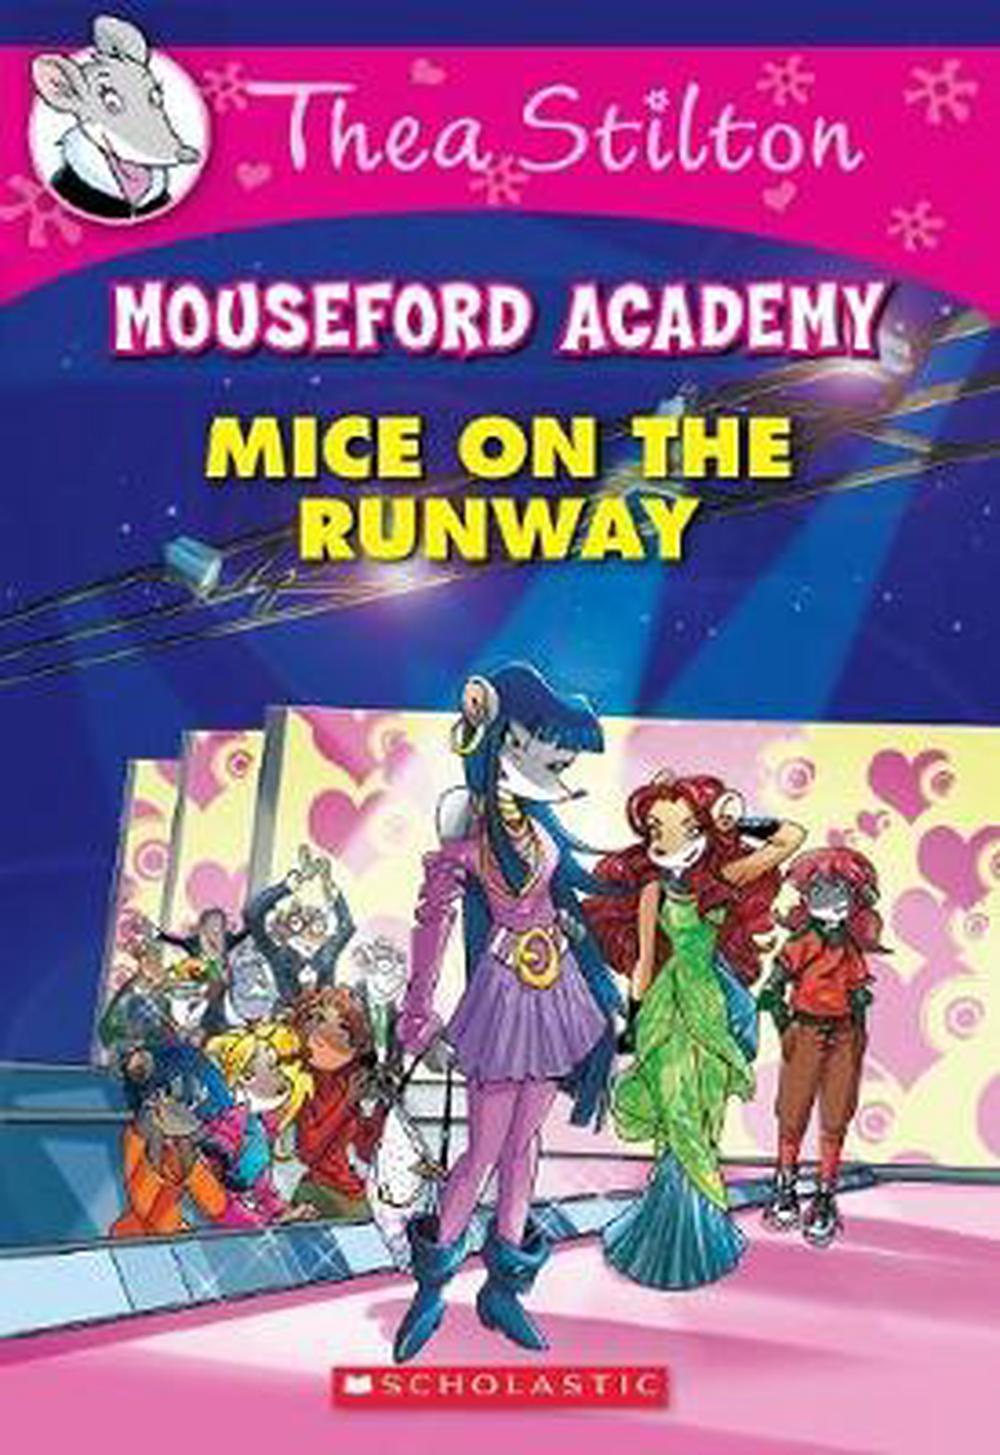 Thea Stilton Mouseford Academy 12 Mice on the Runway by Thea Stilton